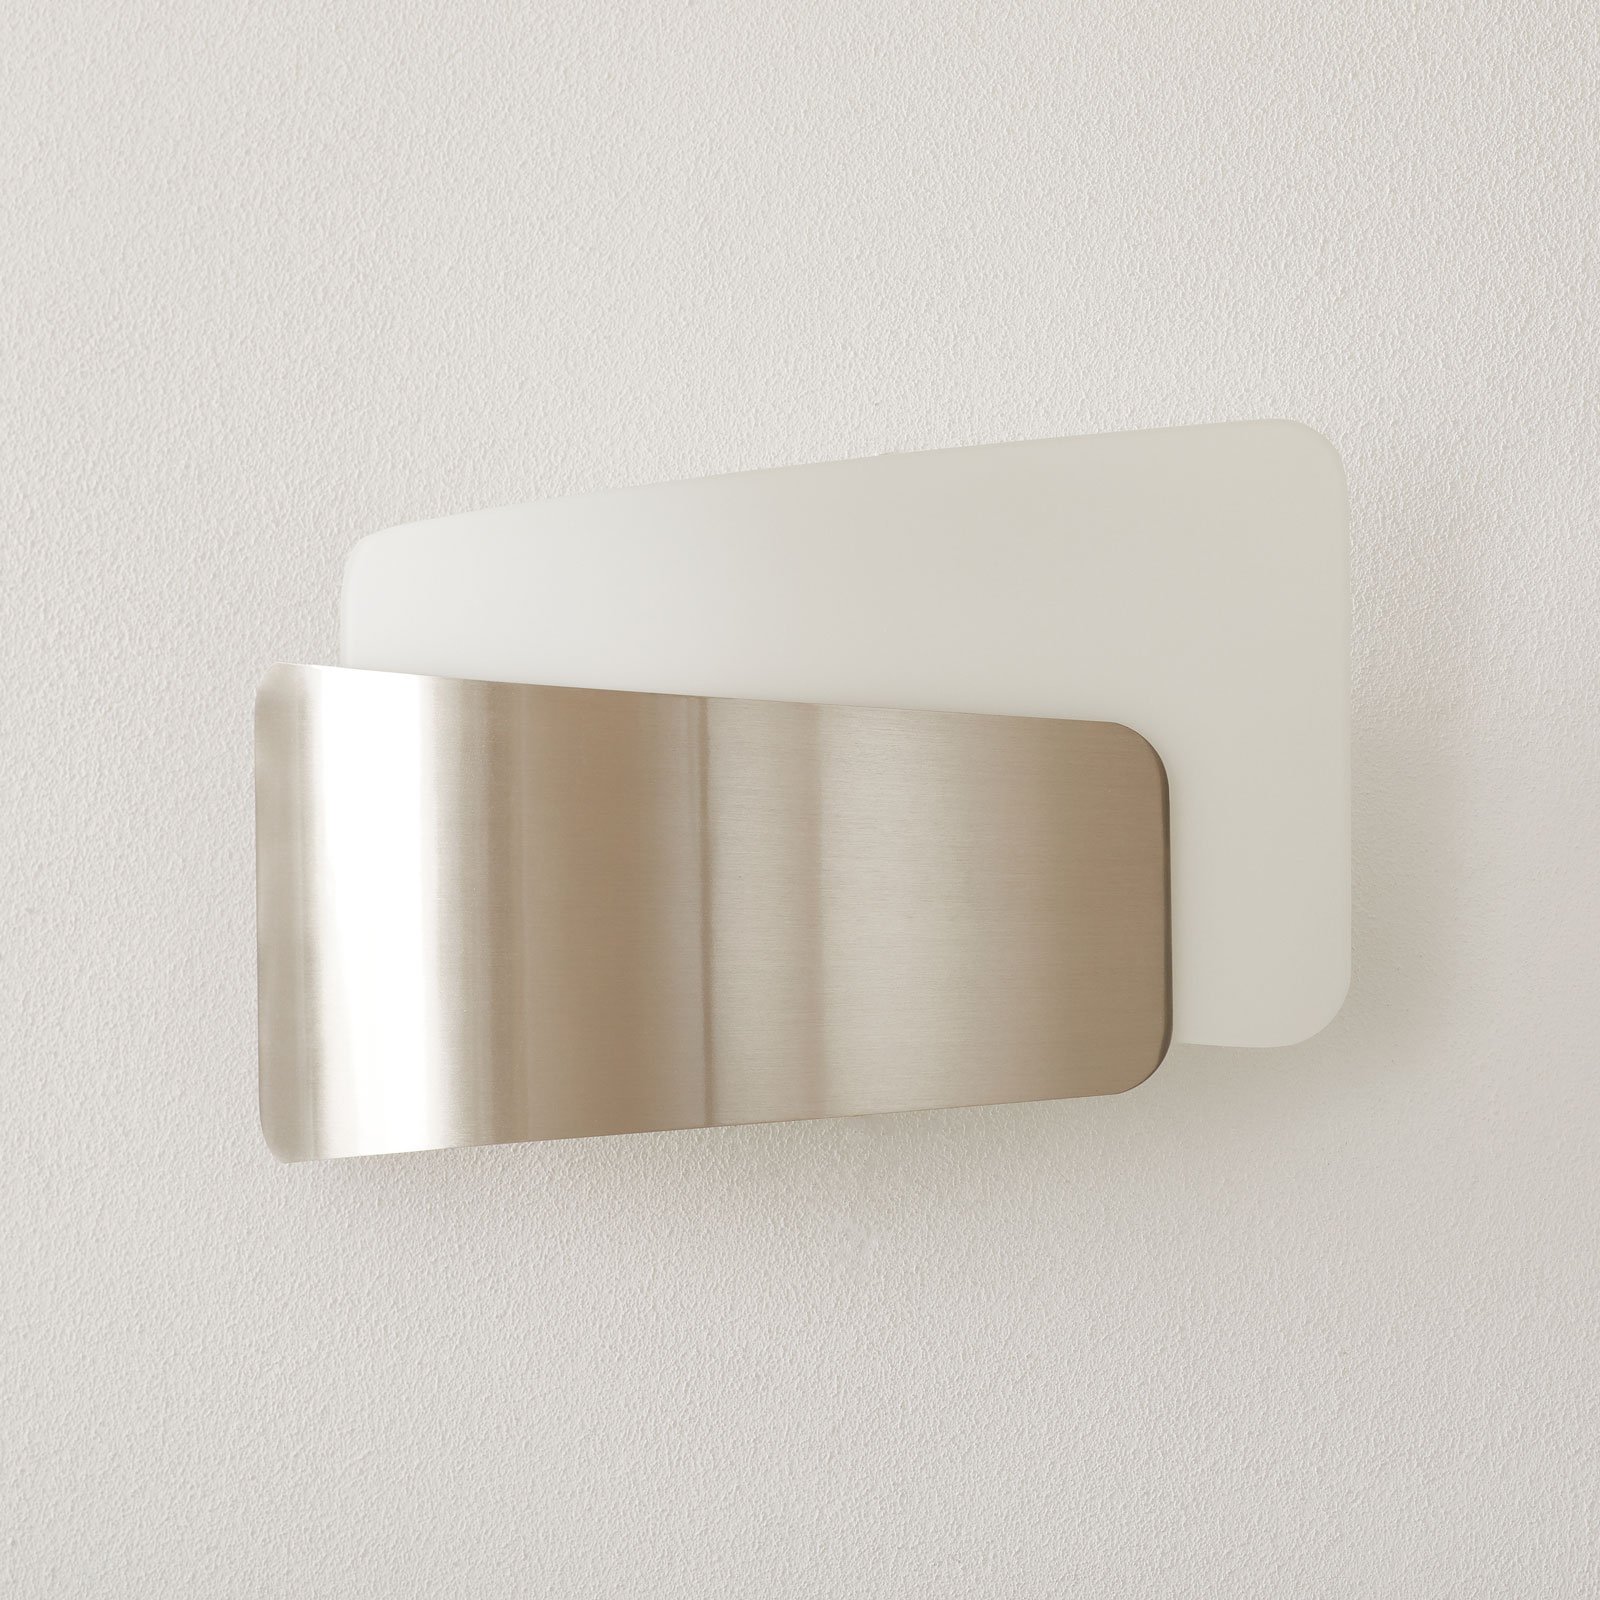 Asymmetrical wall light Slane